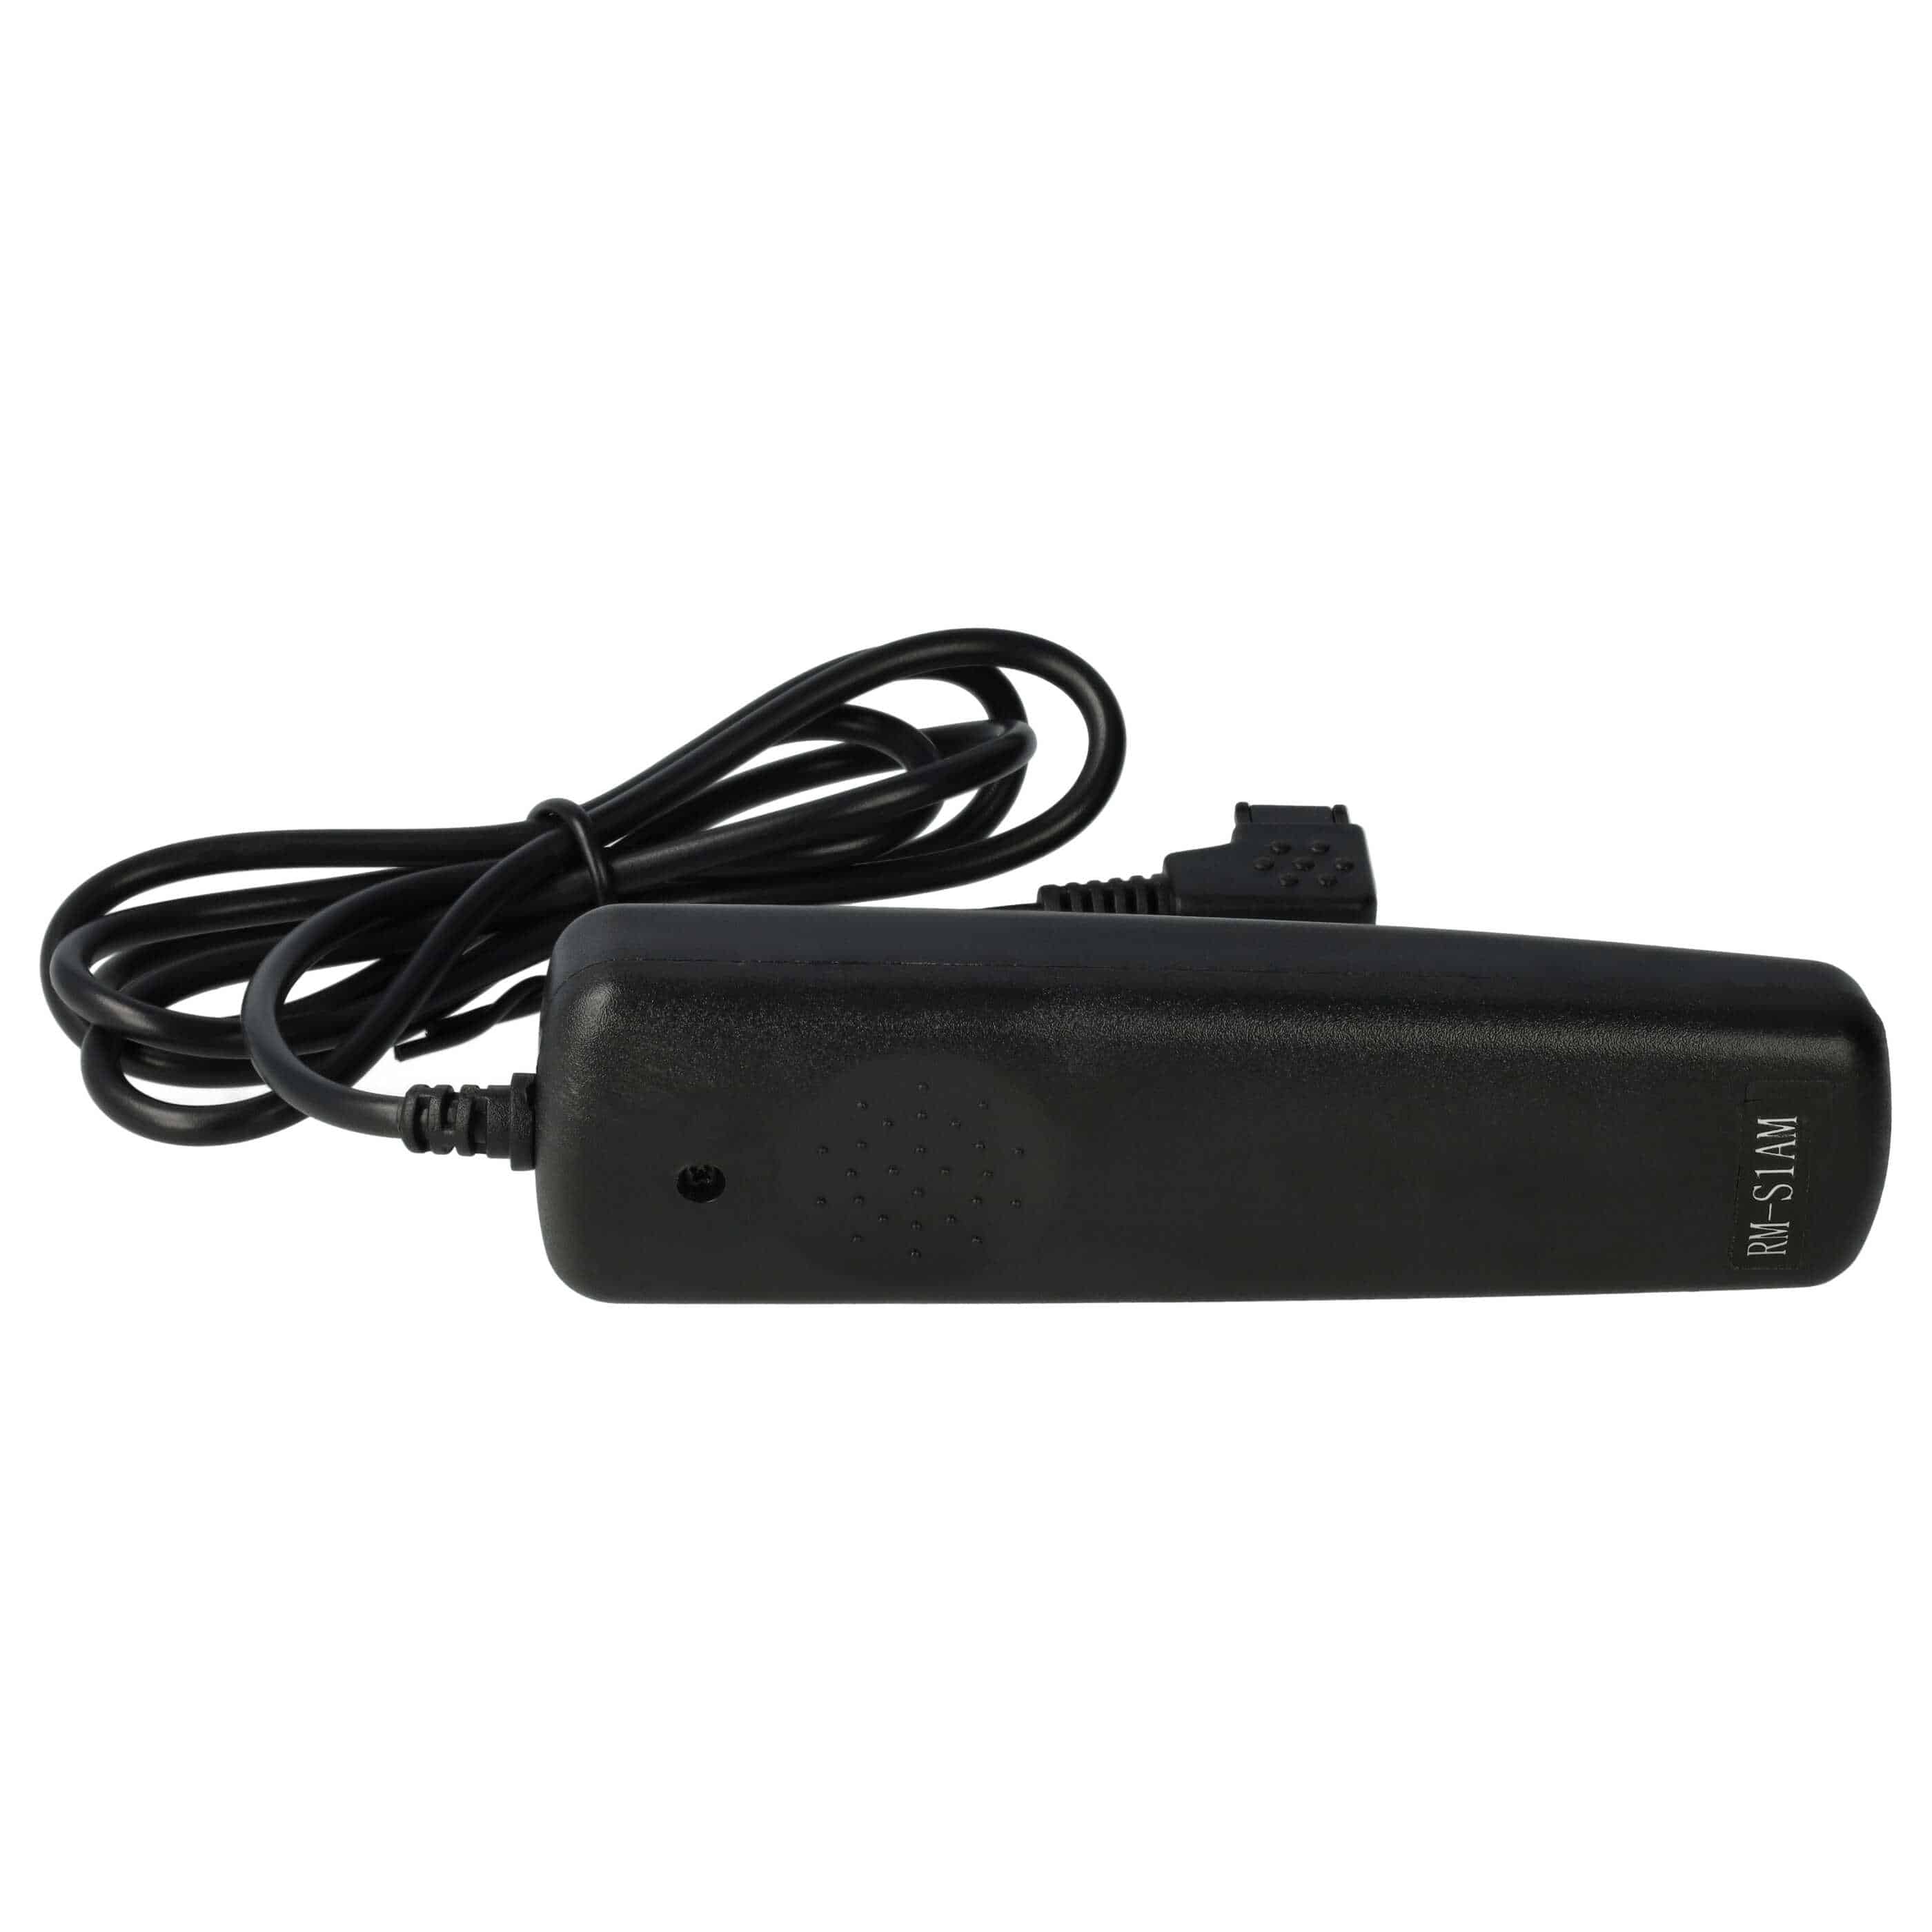 Disparador remoto reemplaza Konica Minolta RC-1000L para cámara, etc. -disparador a 2, cable 1 m